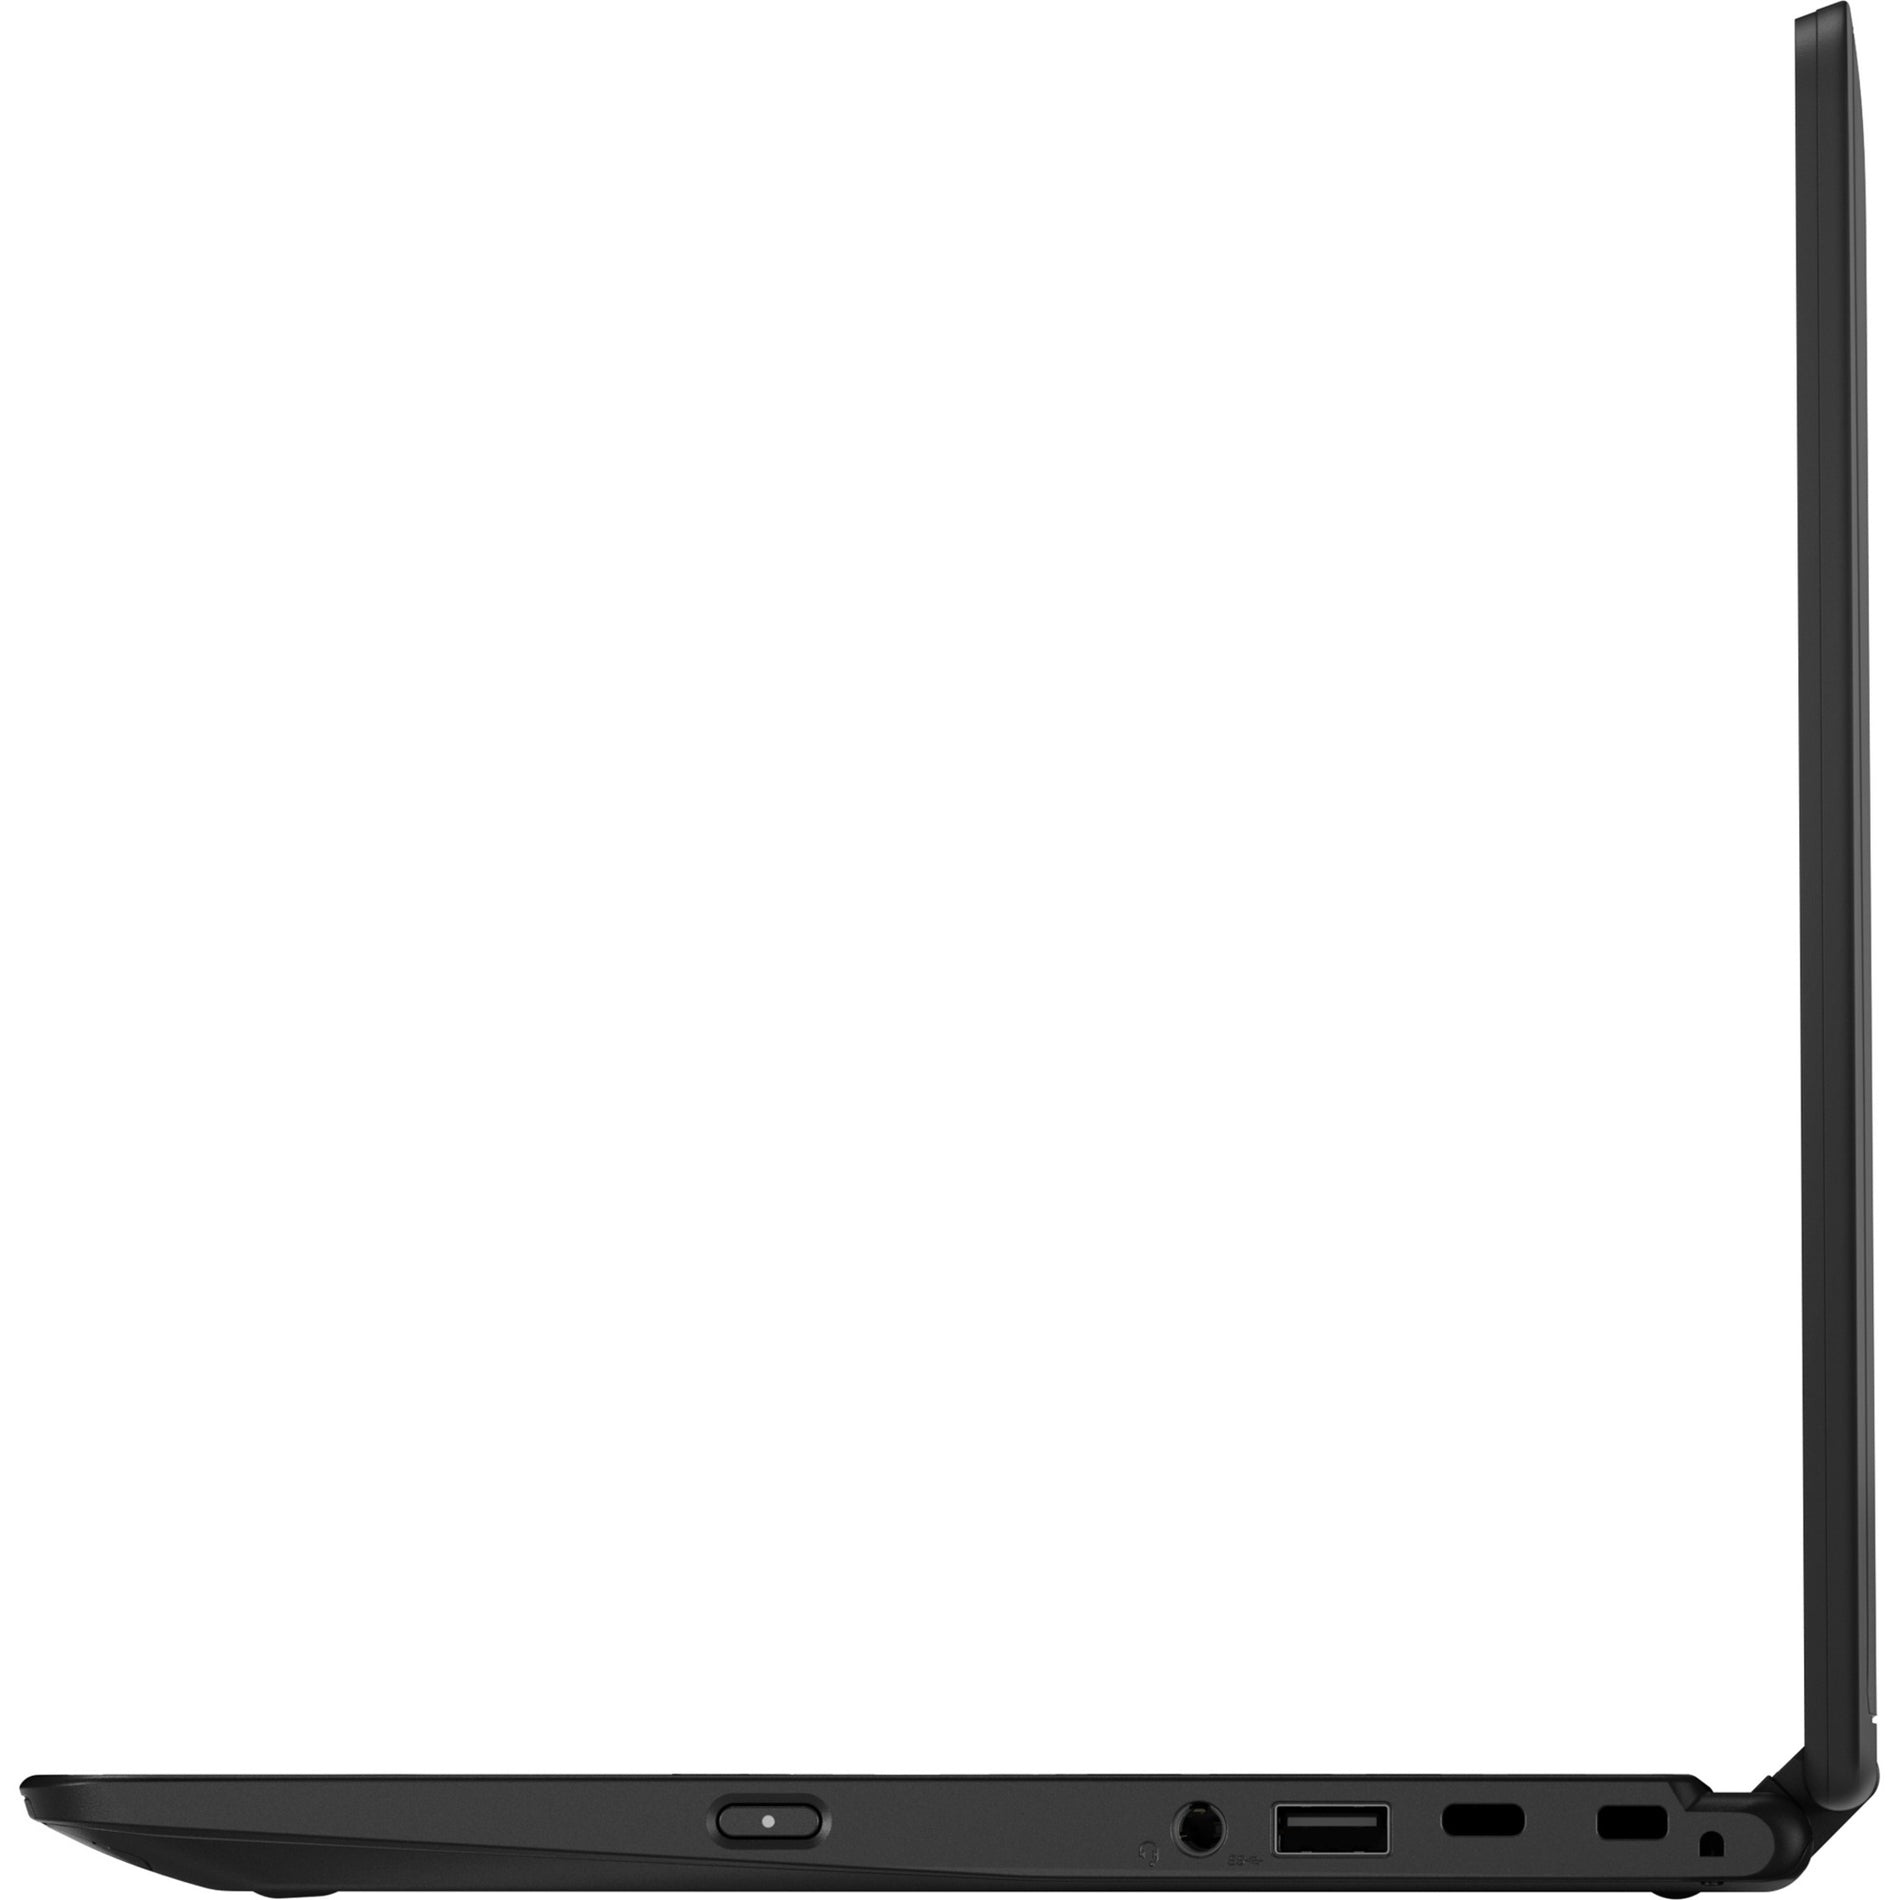 Lenovo 20LQS04200 ThinkPad 11e 5th Gen Netbook, Intel Celeron N4120, 4GB RAM, 128GB SSD, Windows 10 Pro